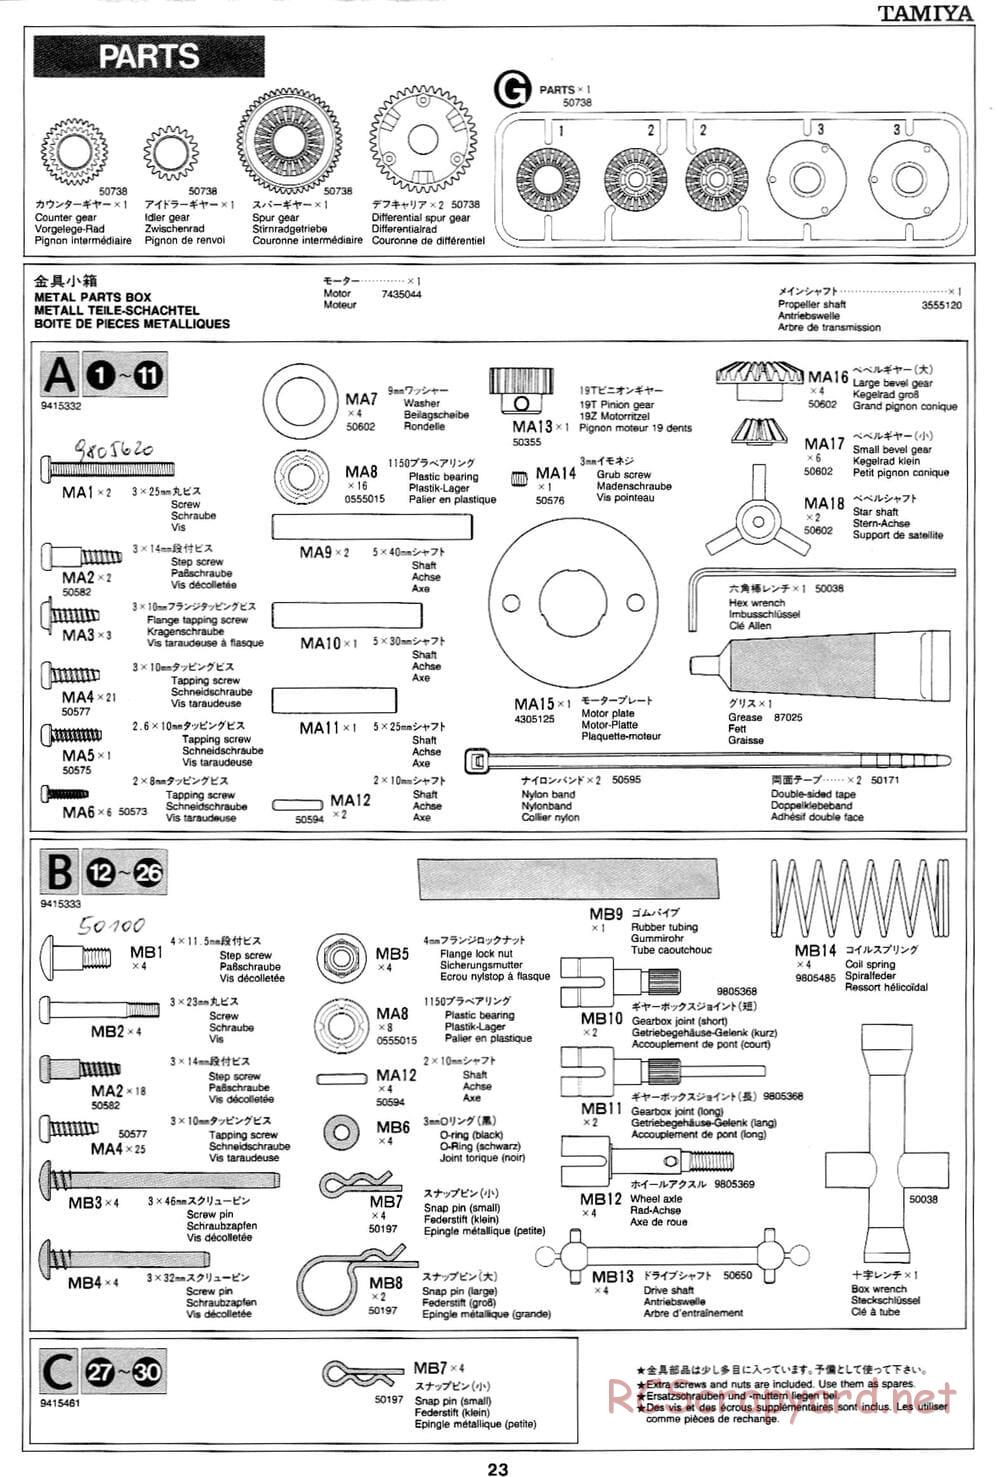 Tamiya - Ford SVT F-150 Lightning - TL-01 Chassis - Manual - Page 23